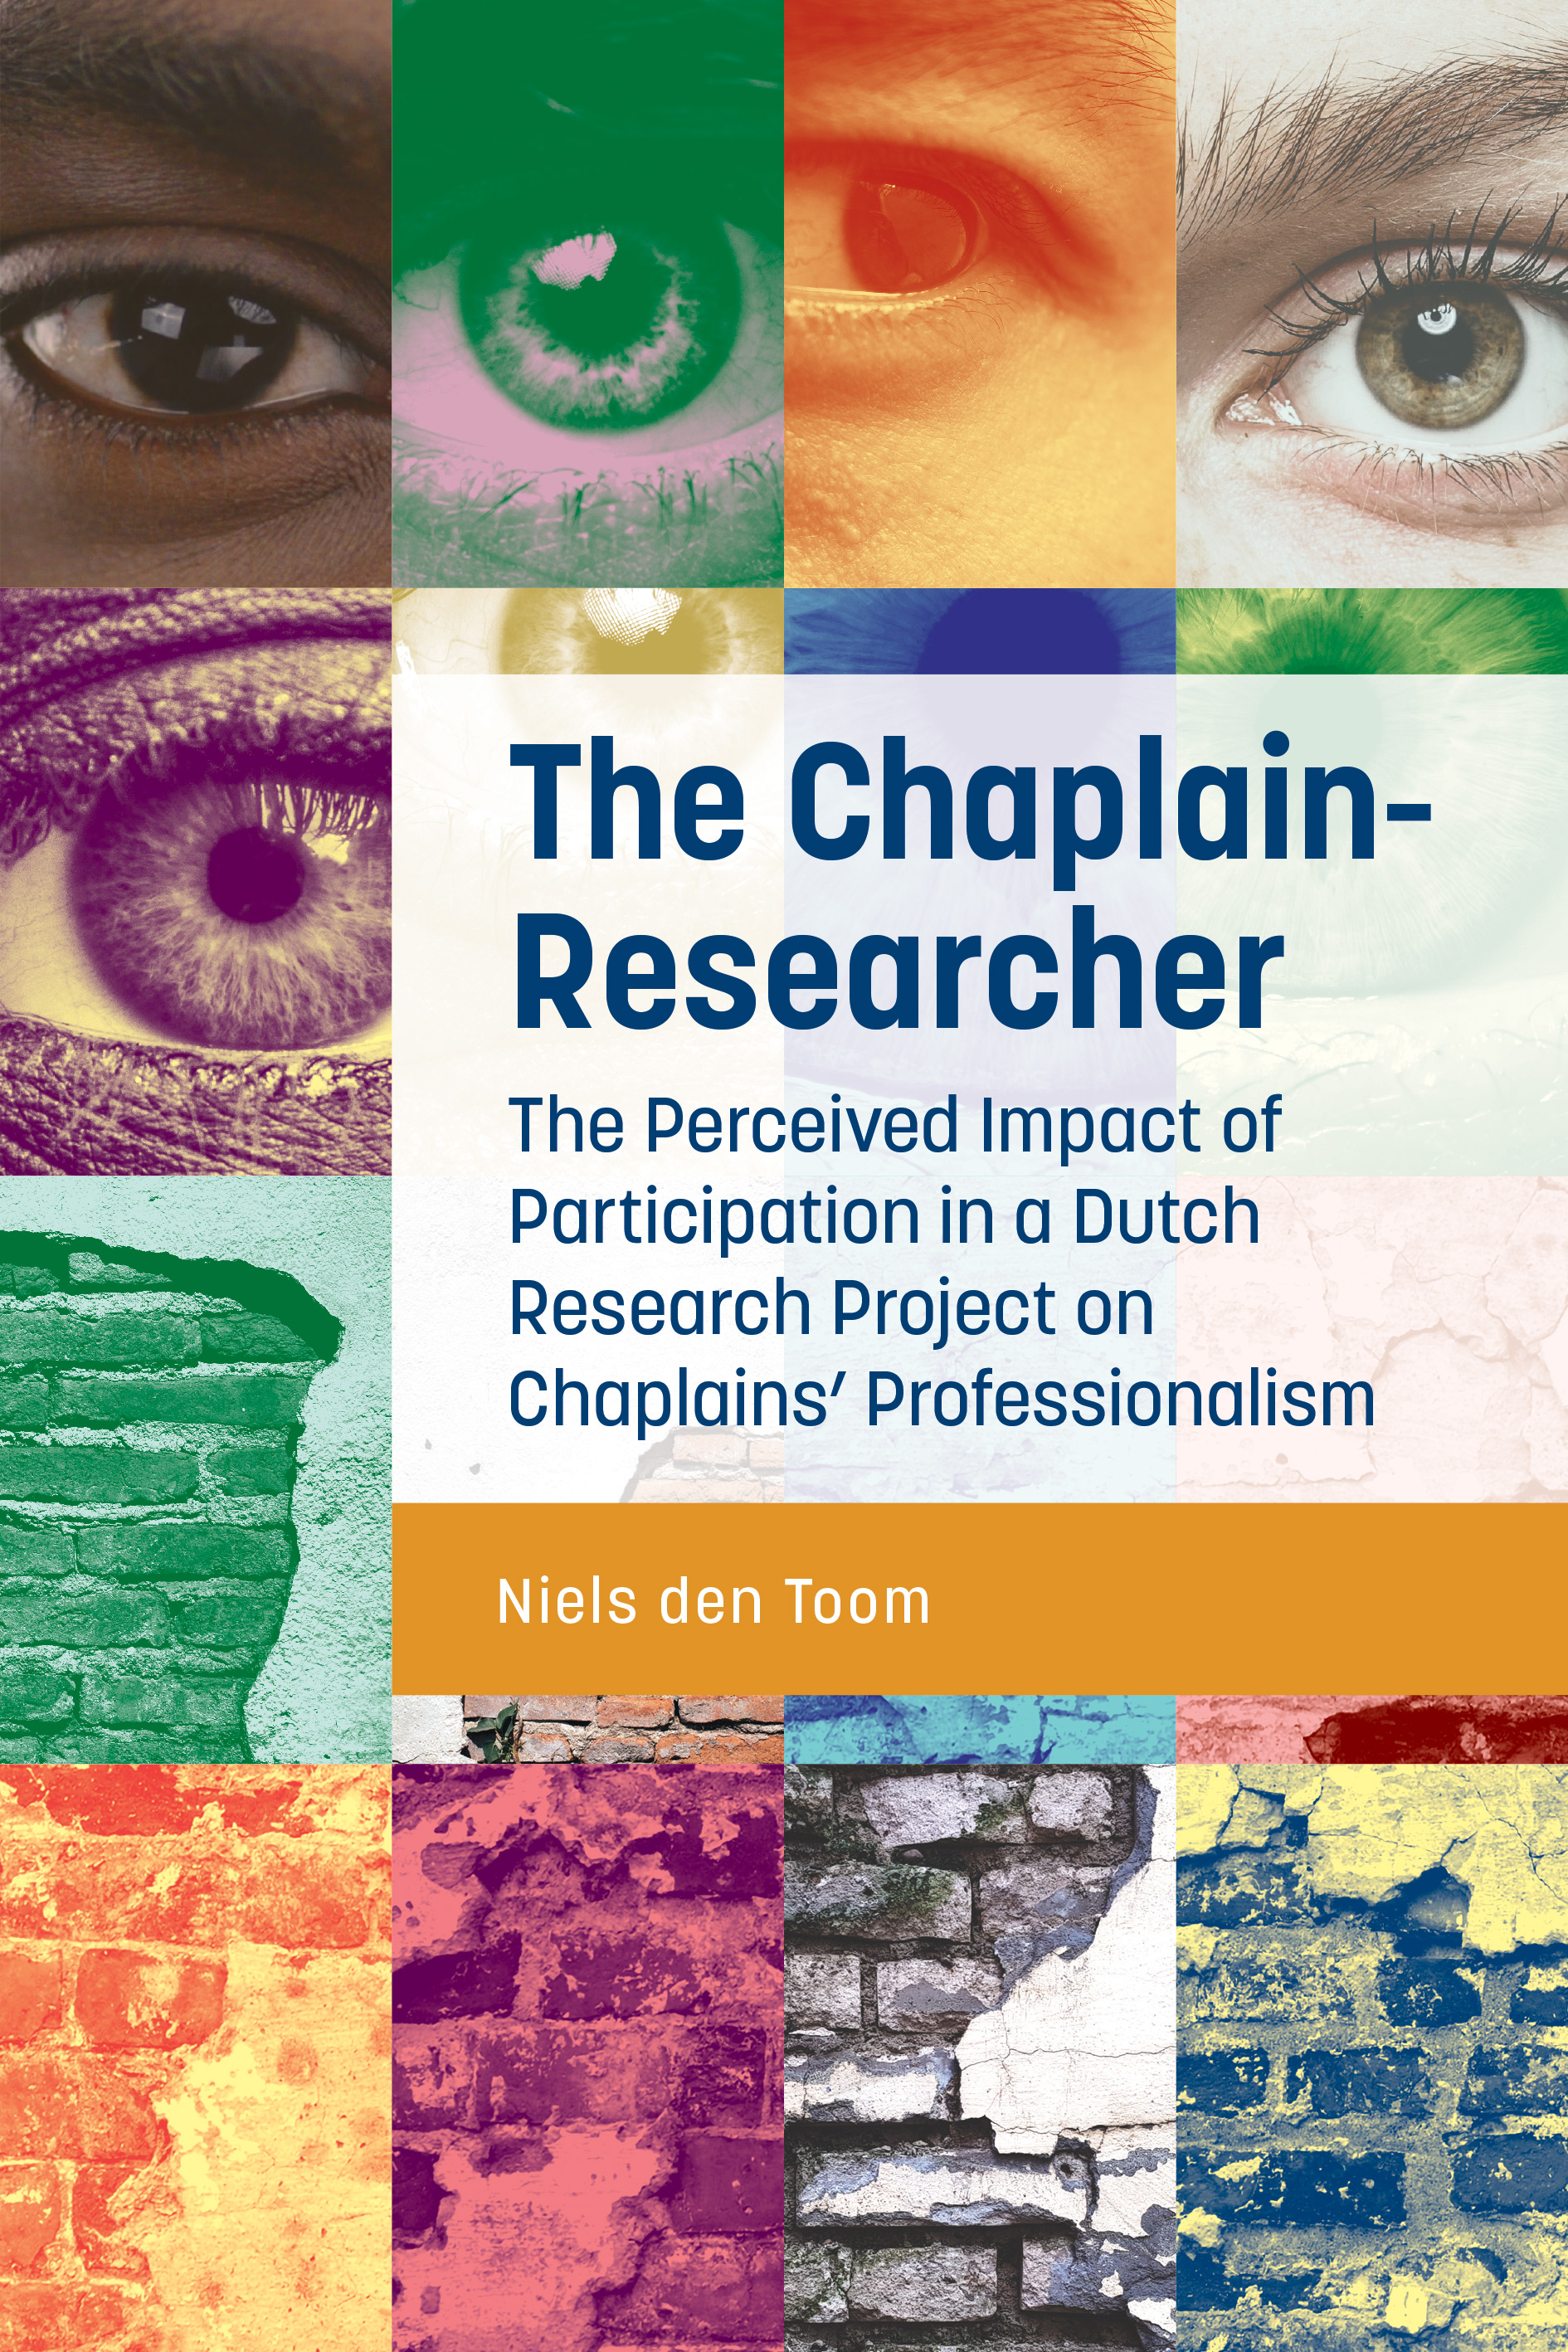 The Chaplain-Researcher